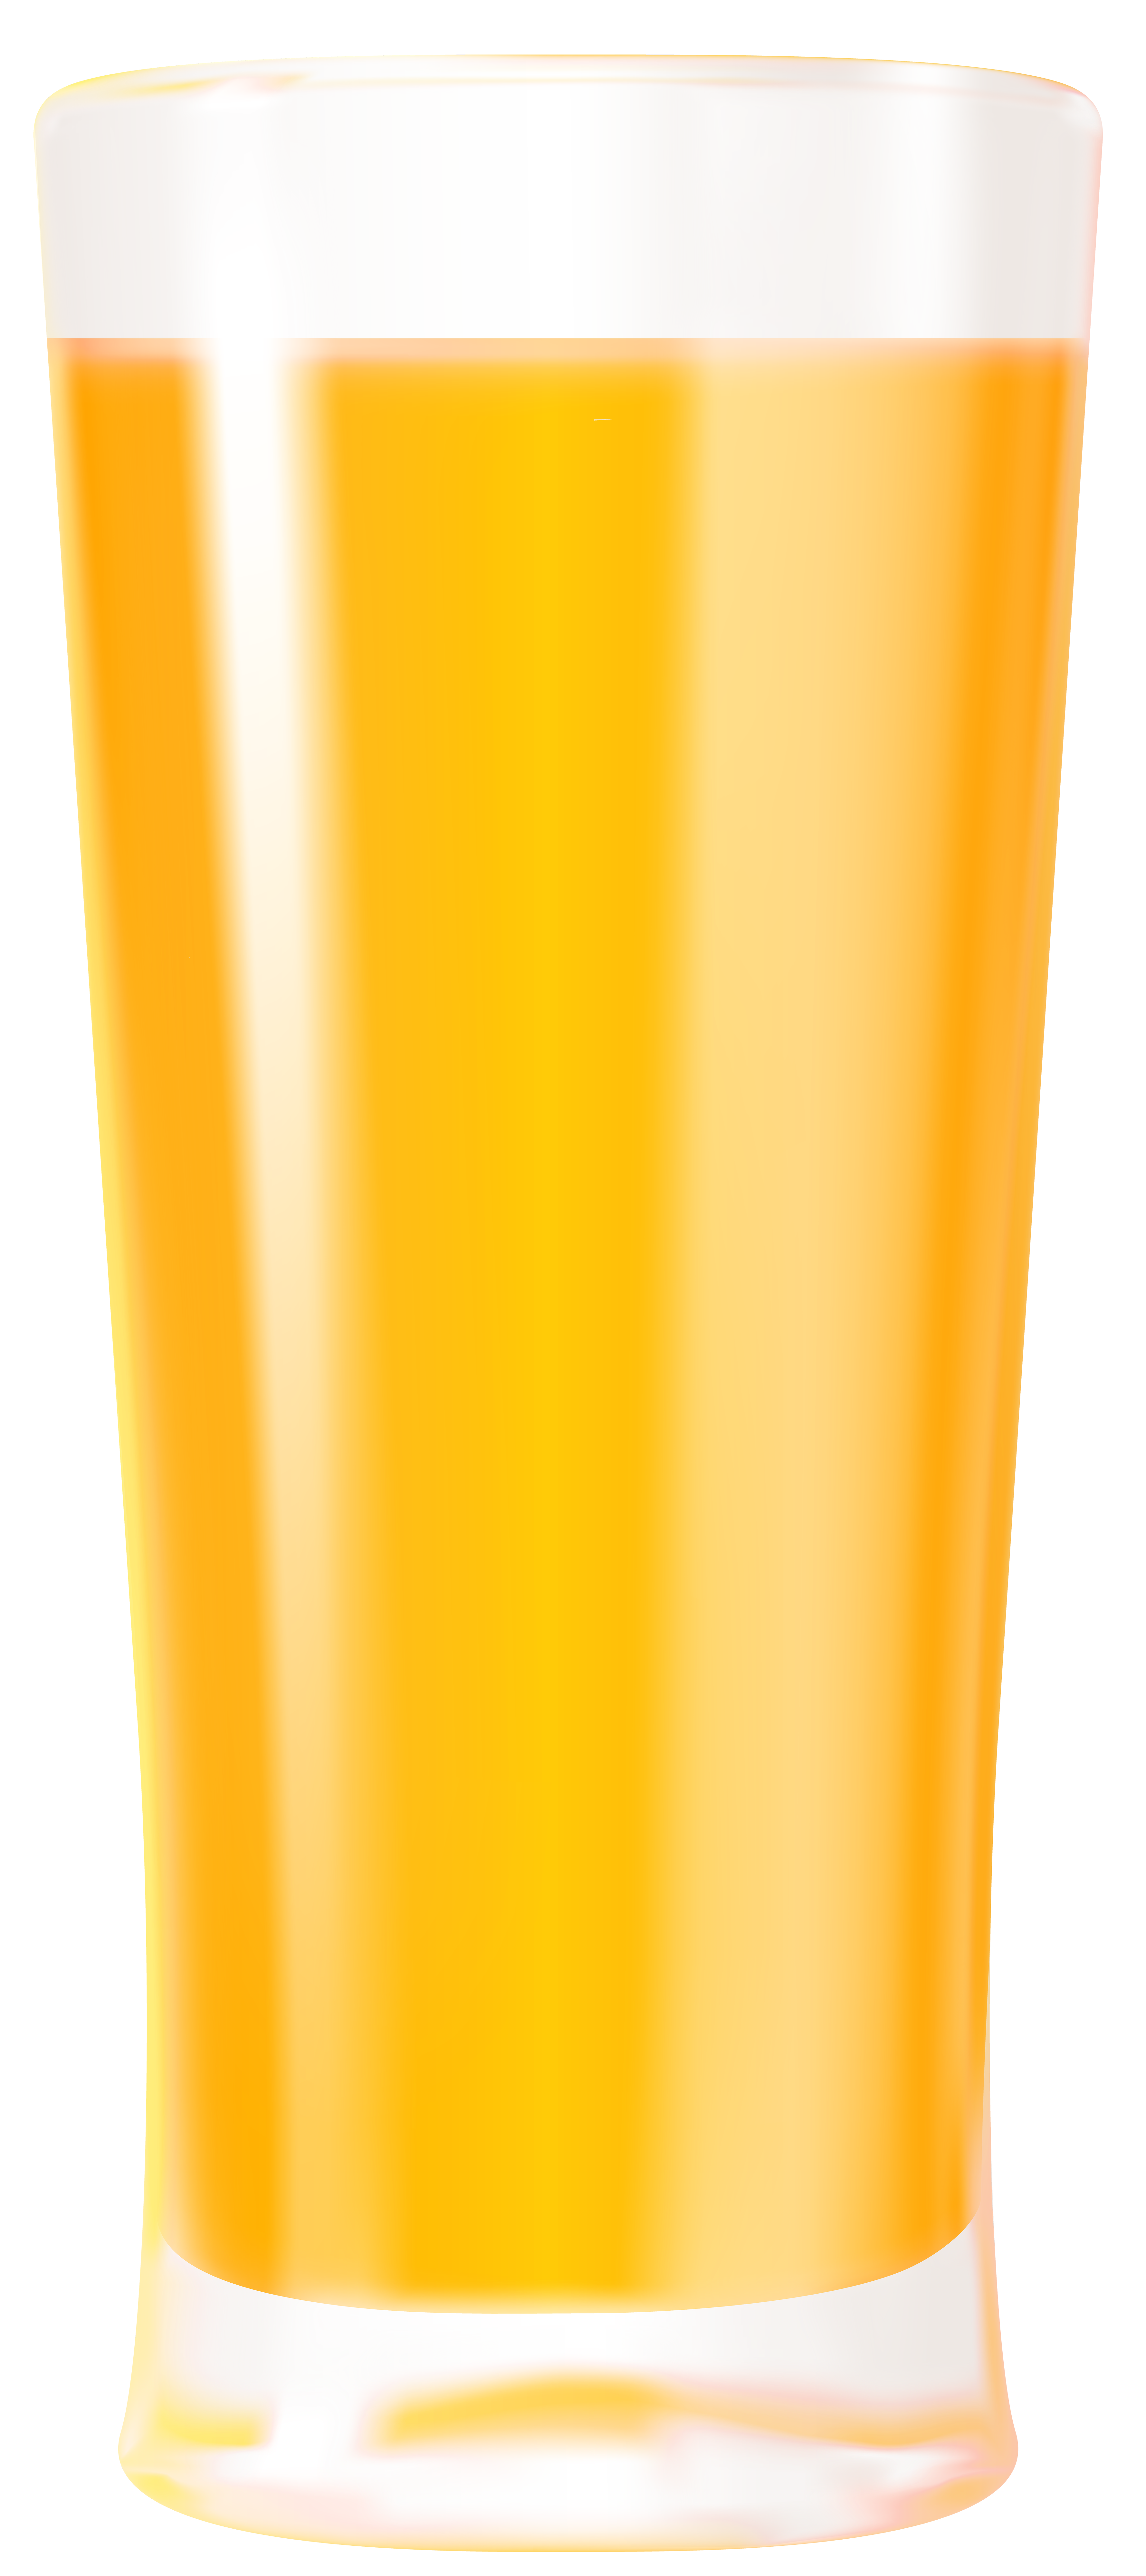 glass of orange juice clipart